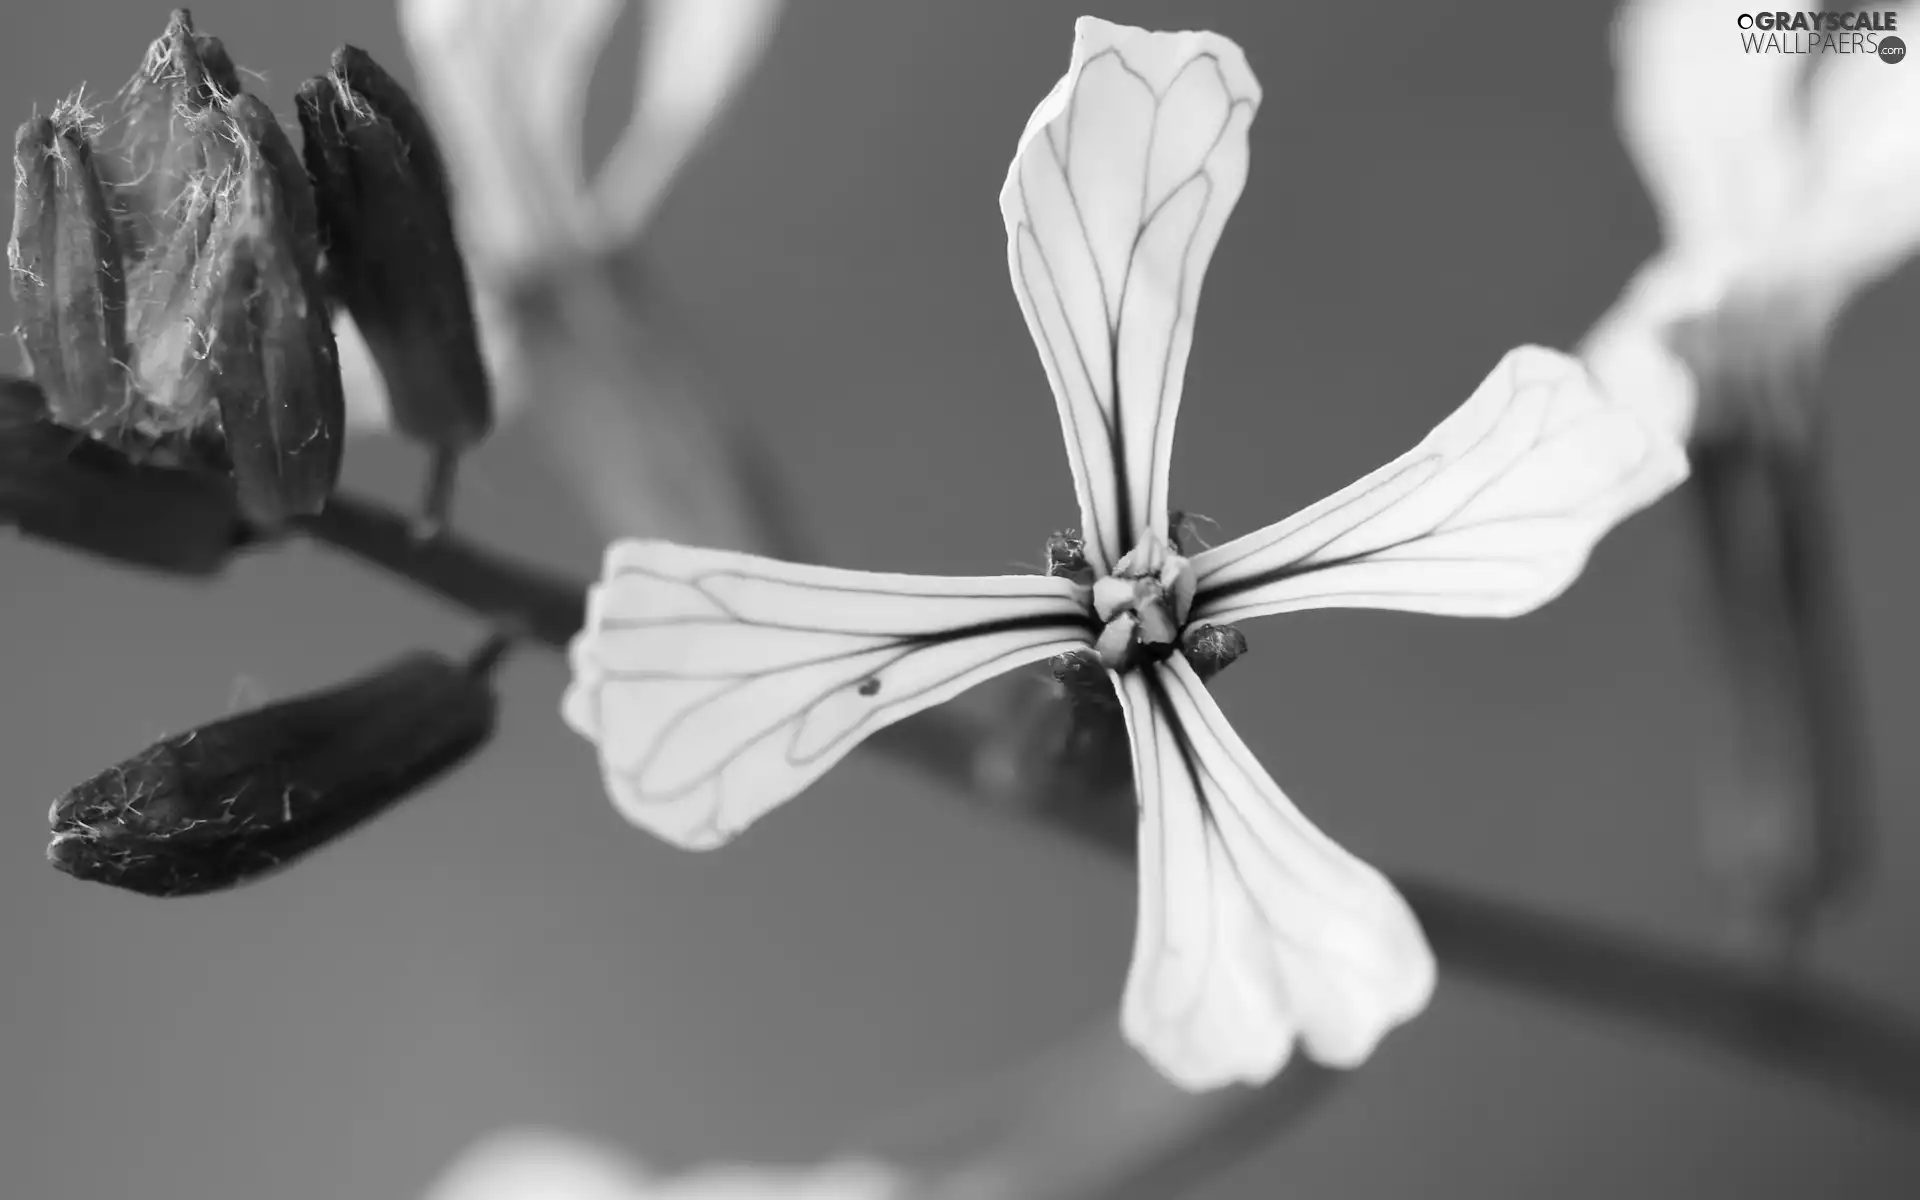 Matthiola, White, Flowers